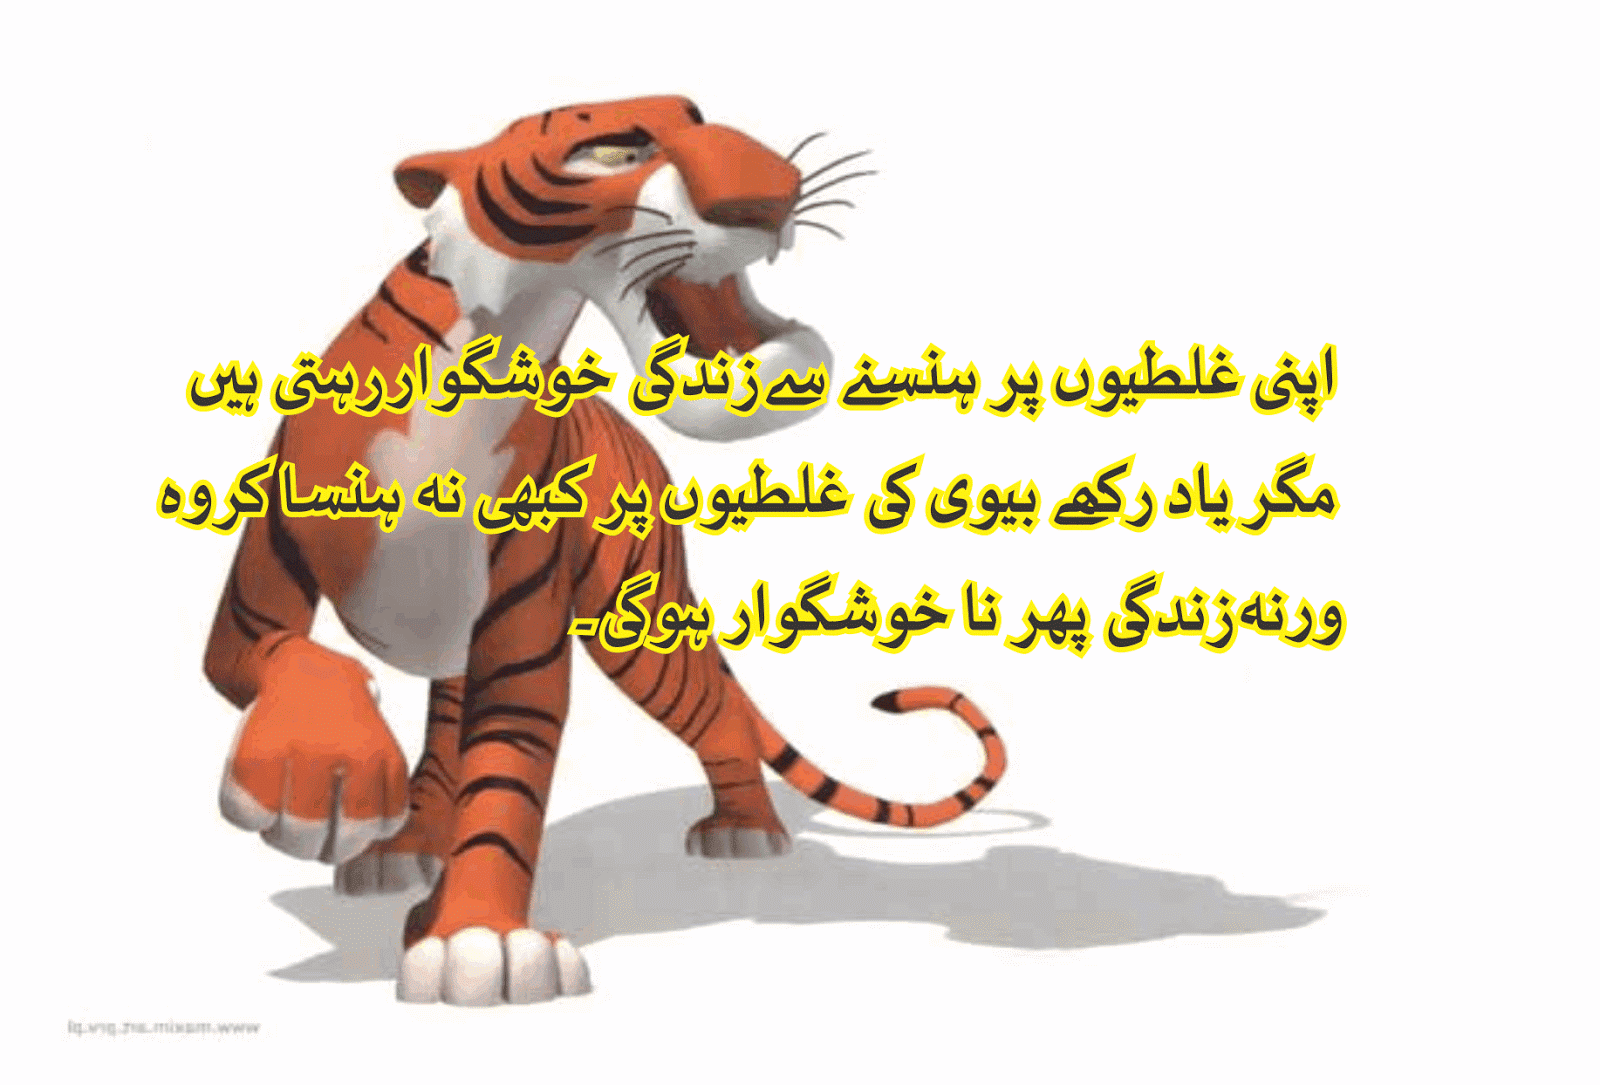 Urdu Jokes Images pictures